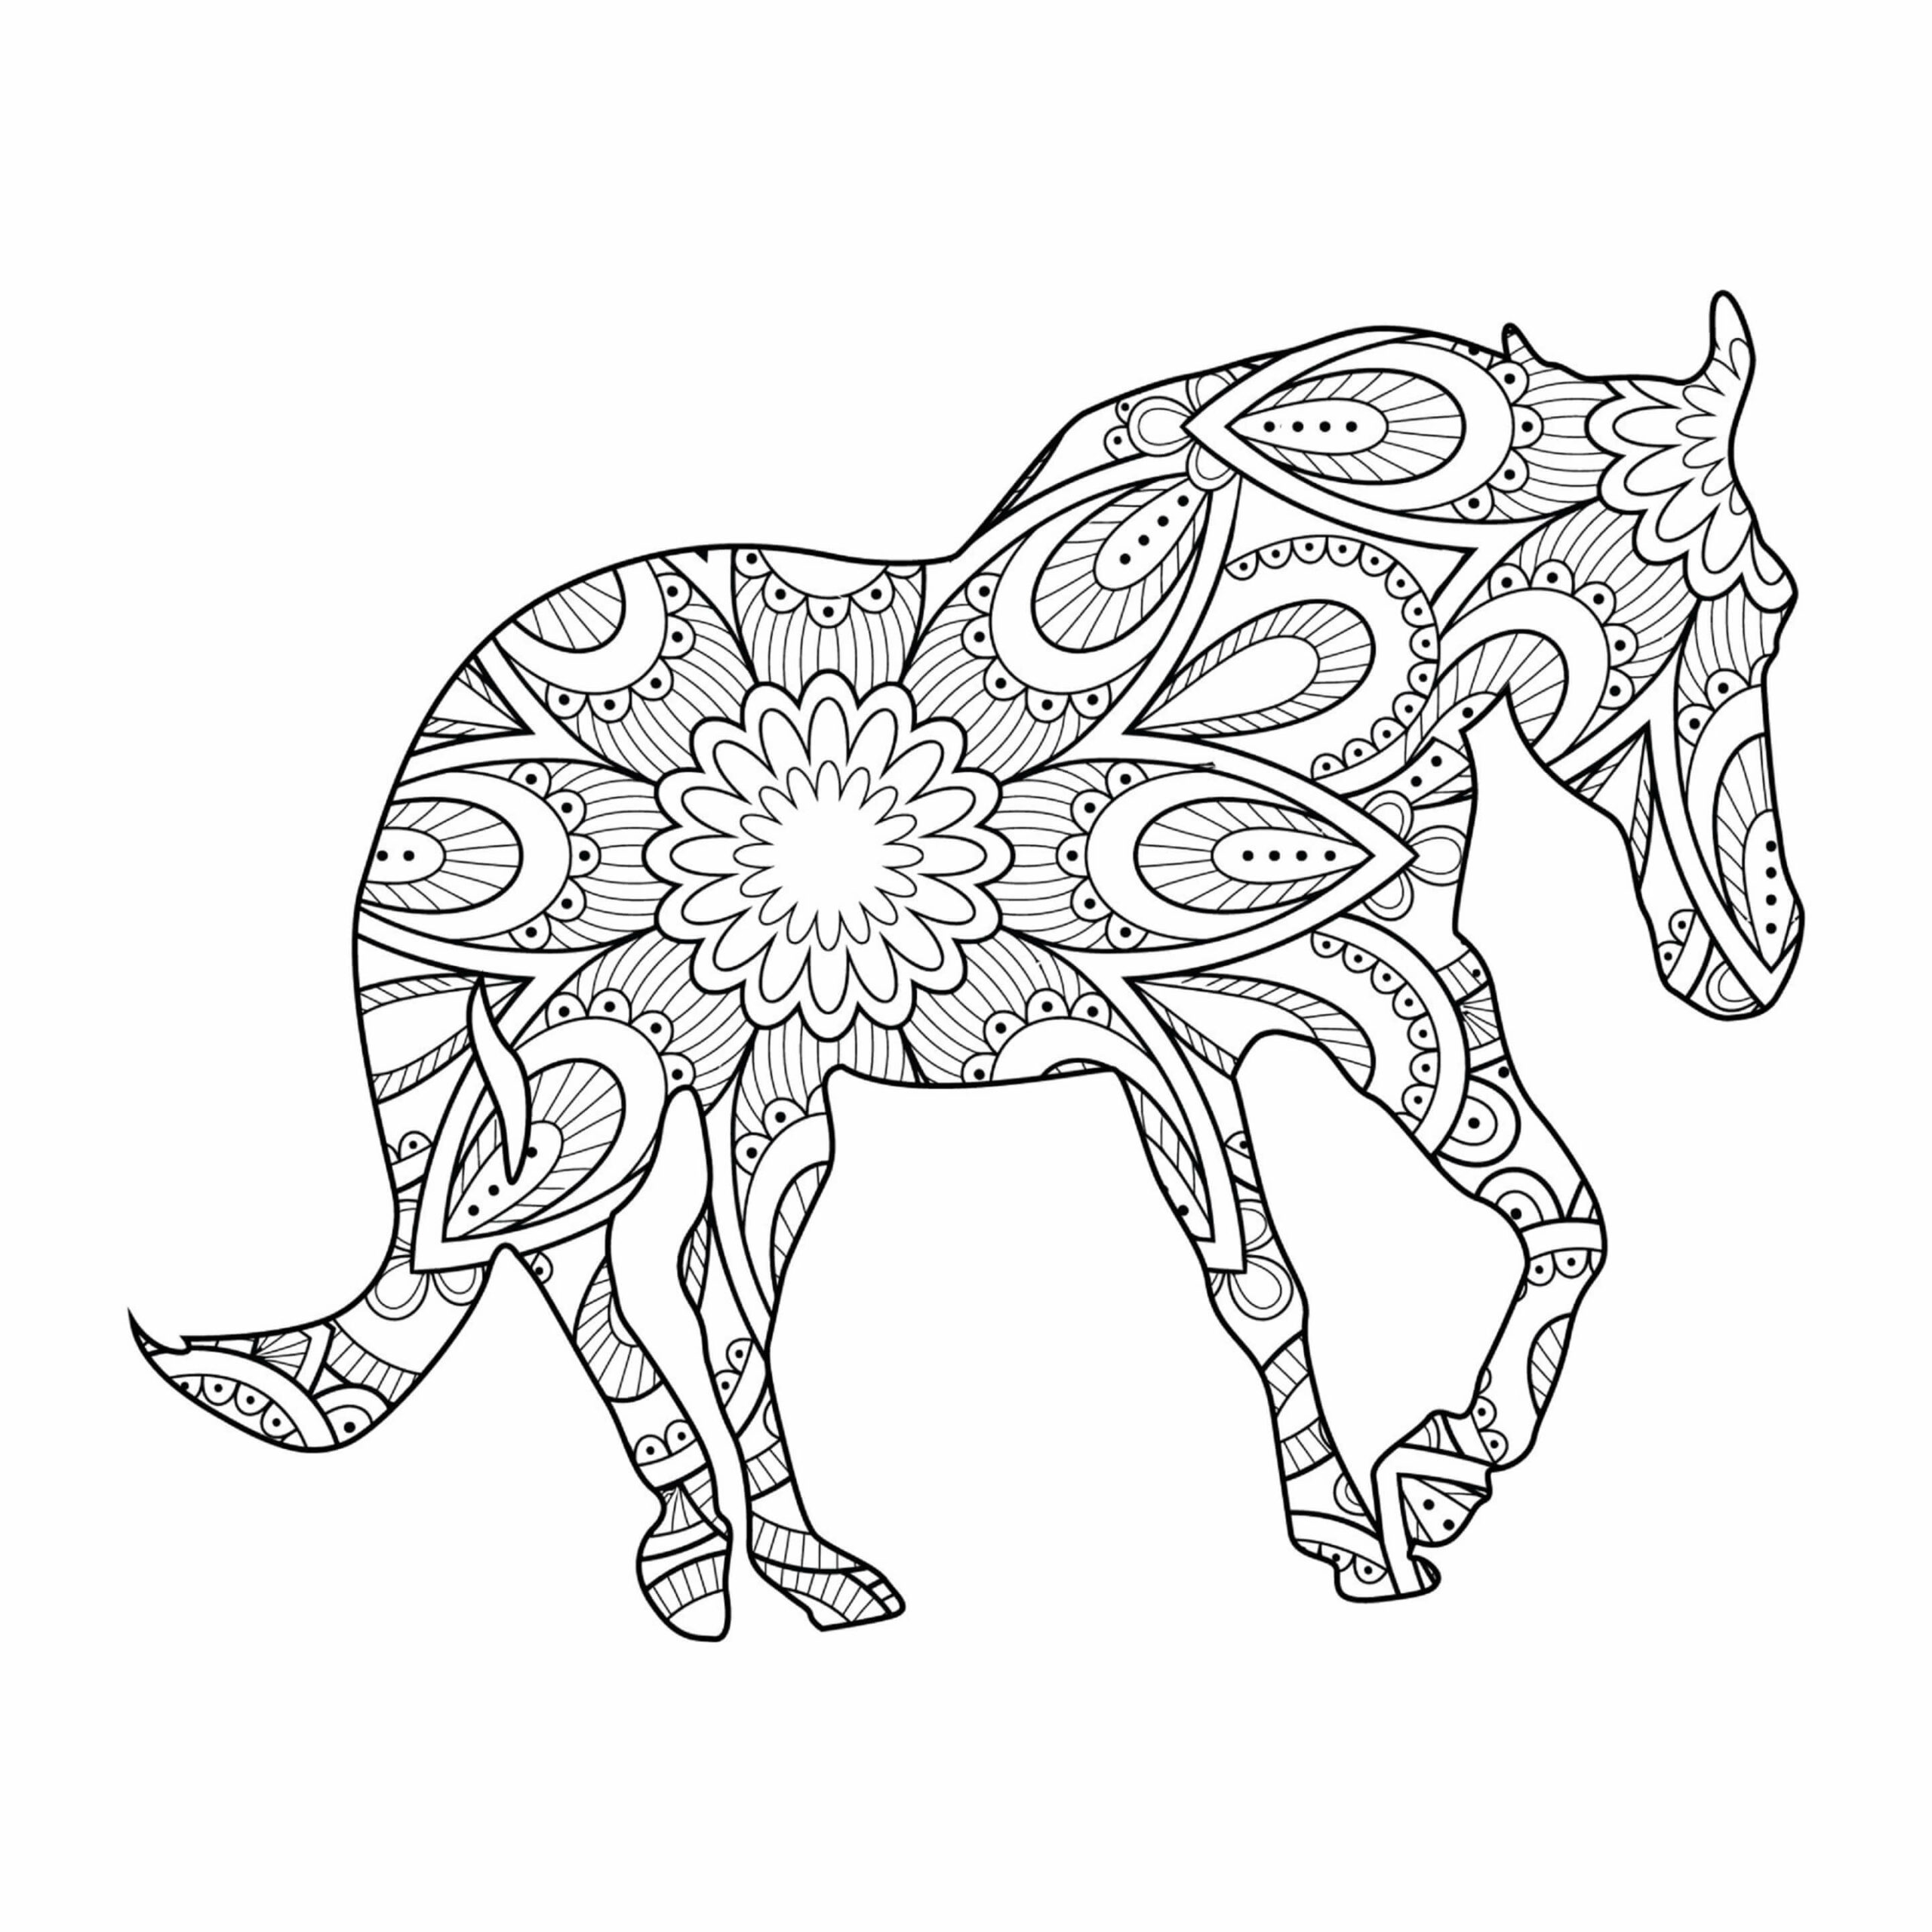 Mandala Horse Coloring Page - Sheet 5 Mandalas